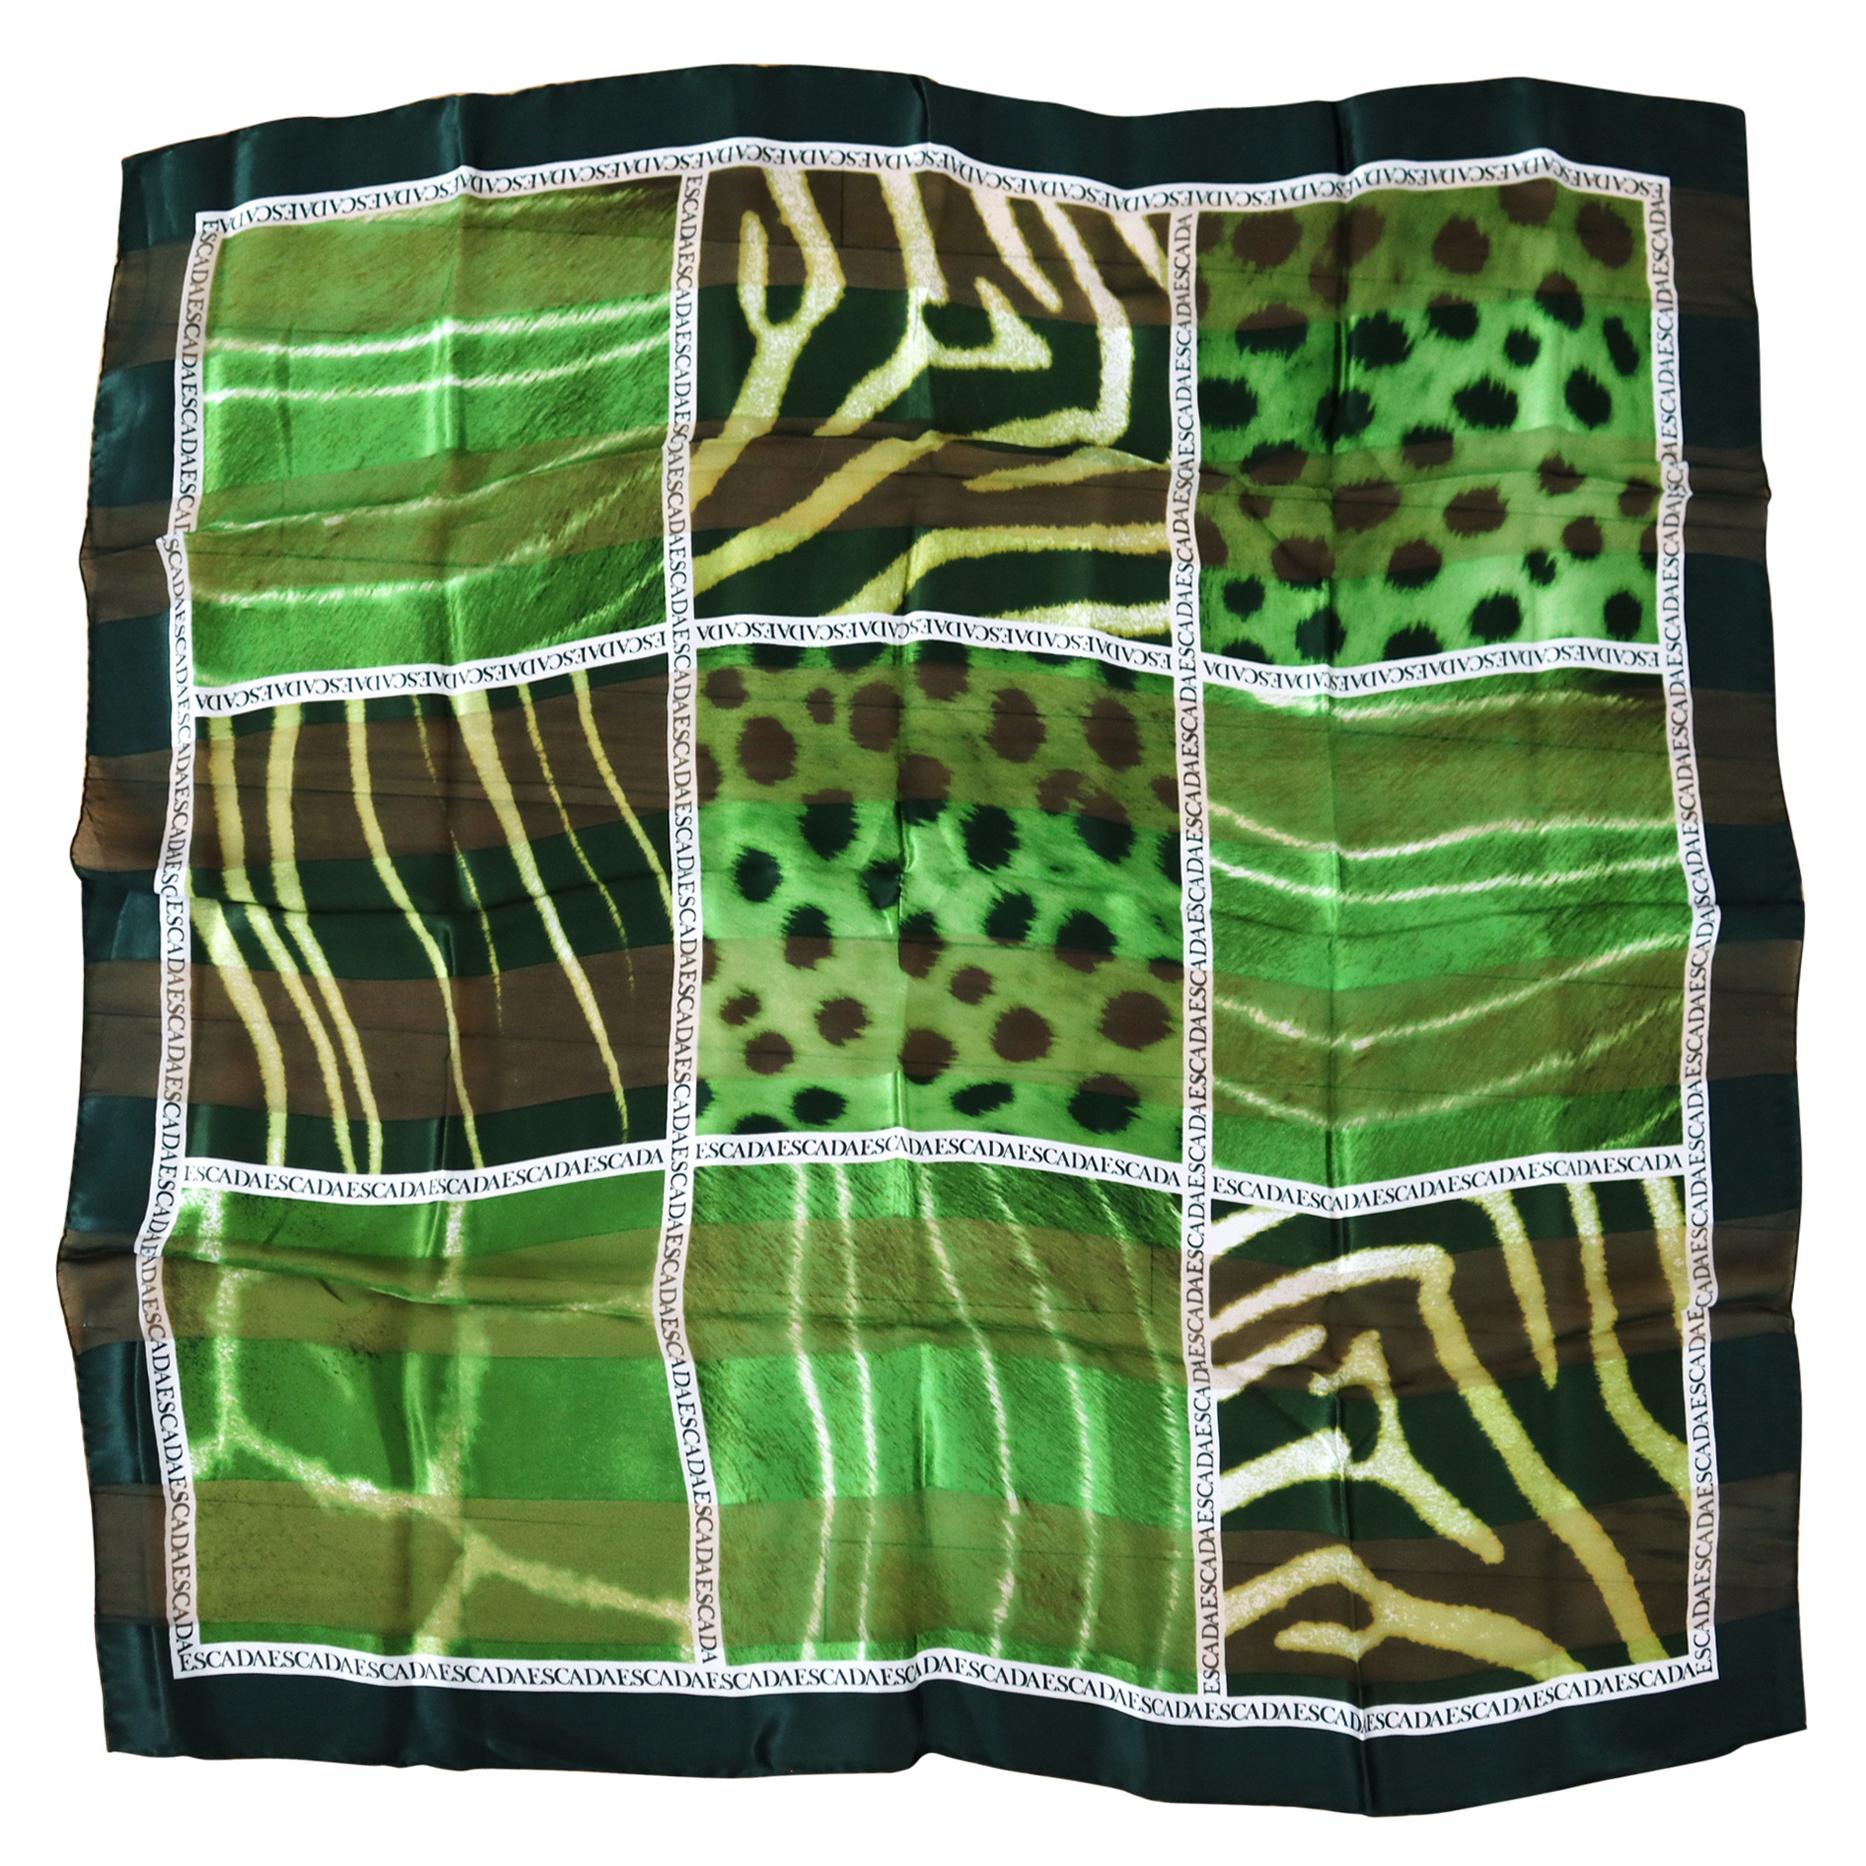  Escada Silk Scarf Green Leopard / Zebra - Made in Italy New, Never Worn w/ Tag